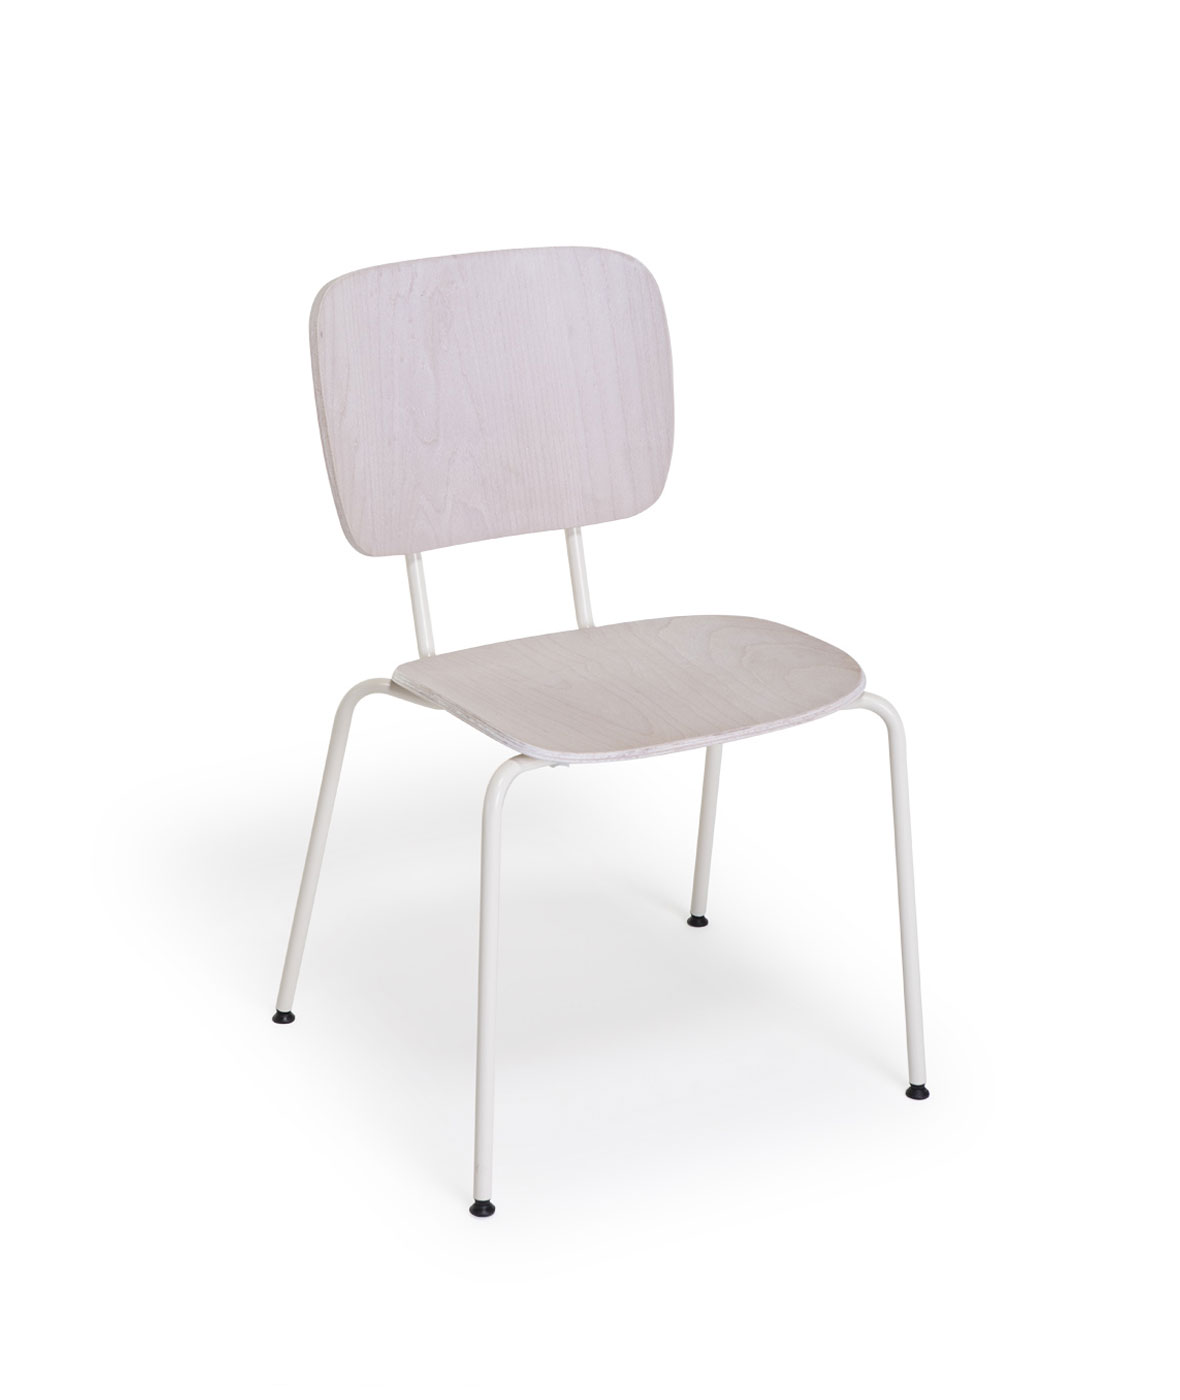 ABC chair with metallic legs - Vergés